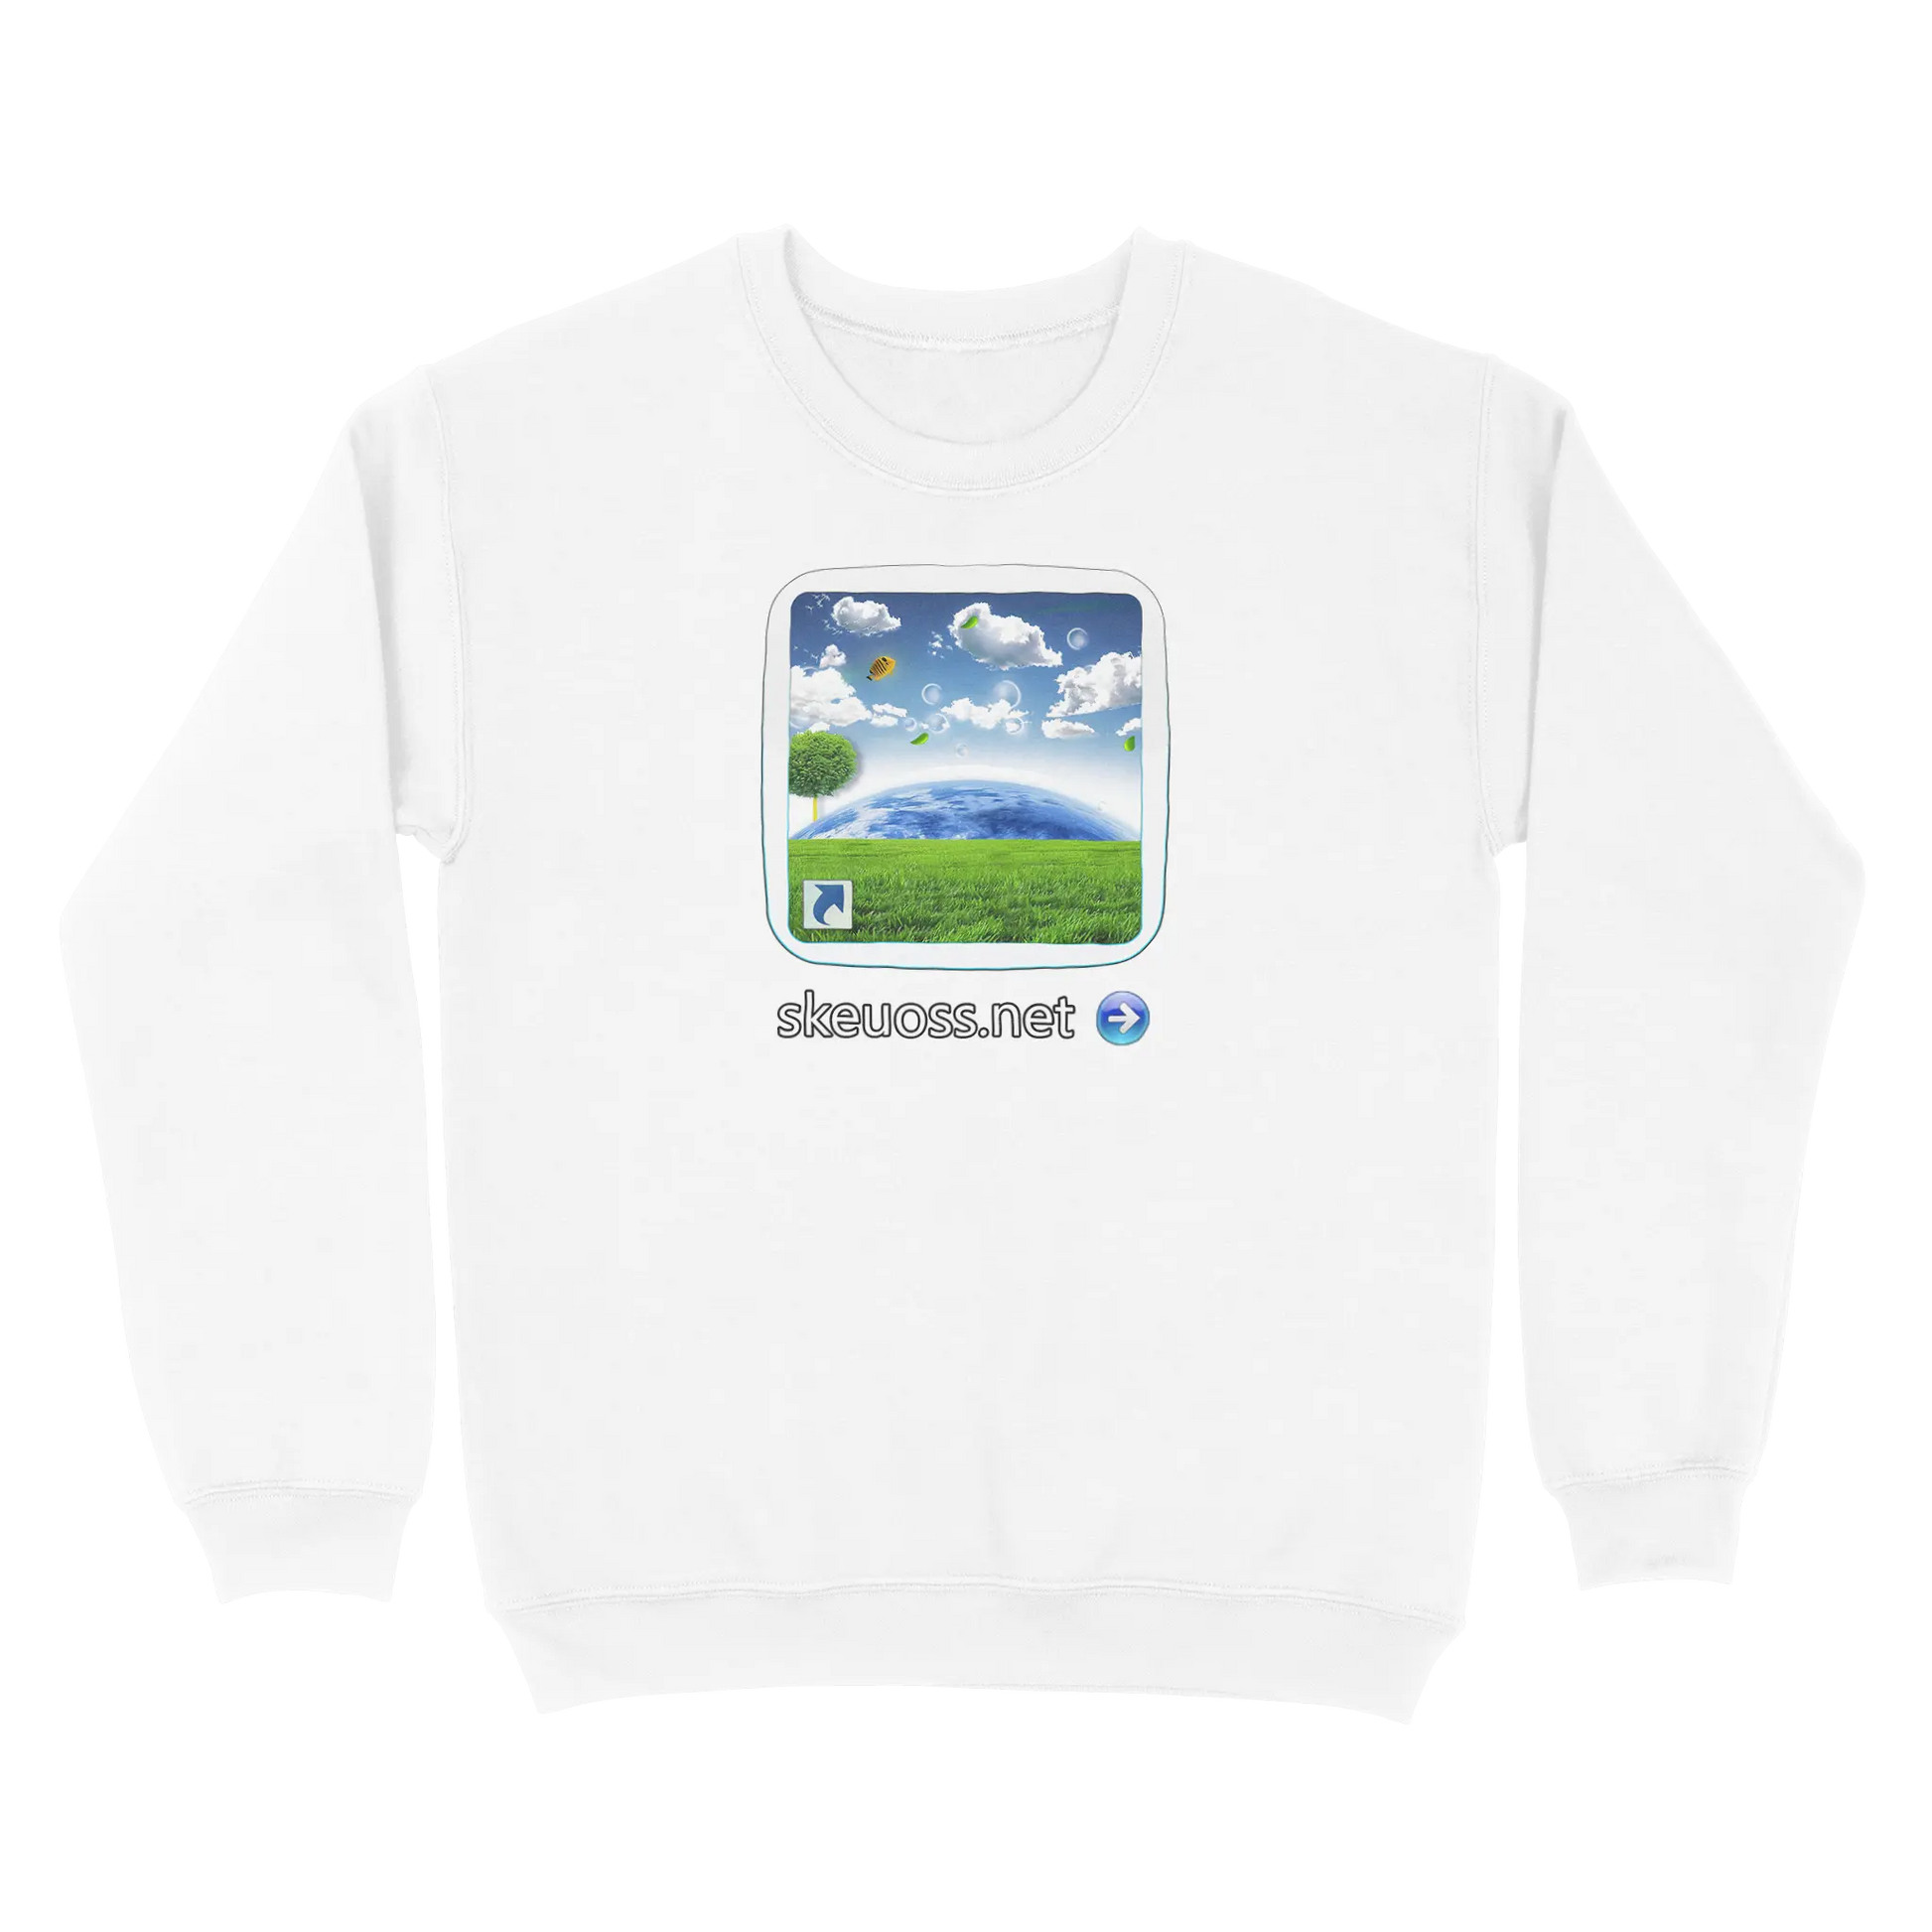 Frutiger Aero Sweatshirt - User Login Collection - User 303